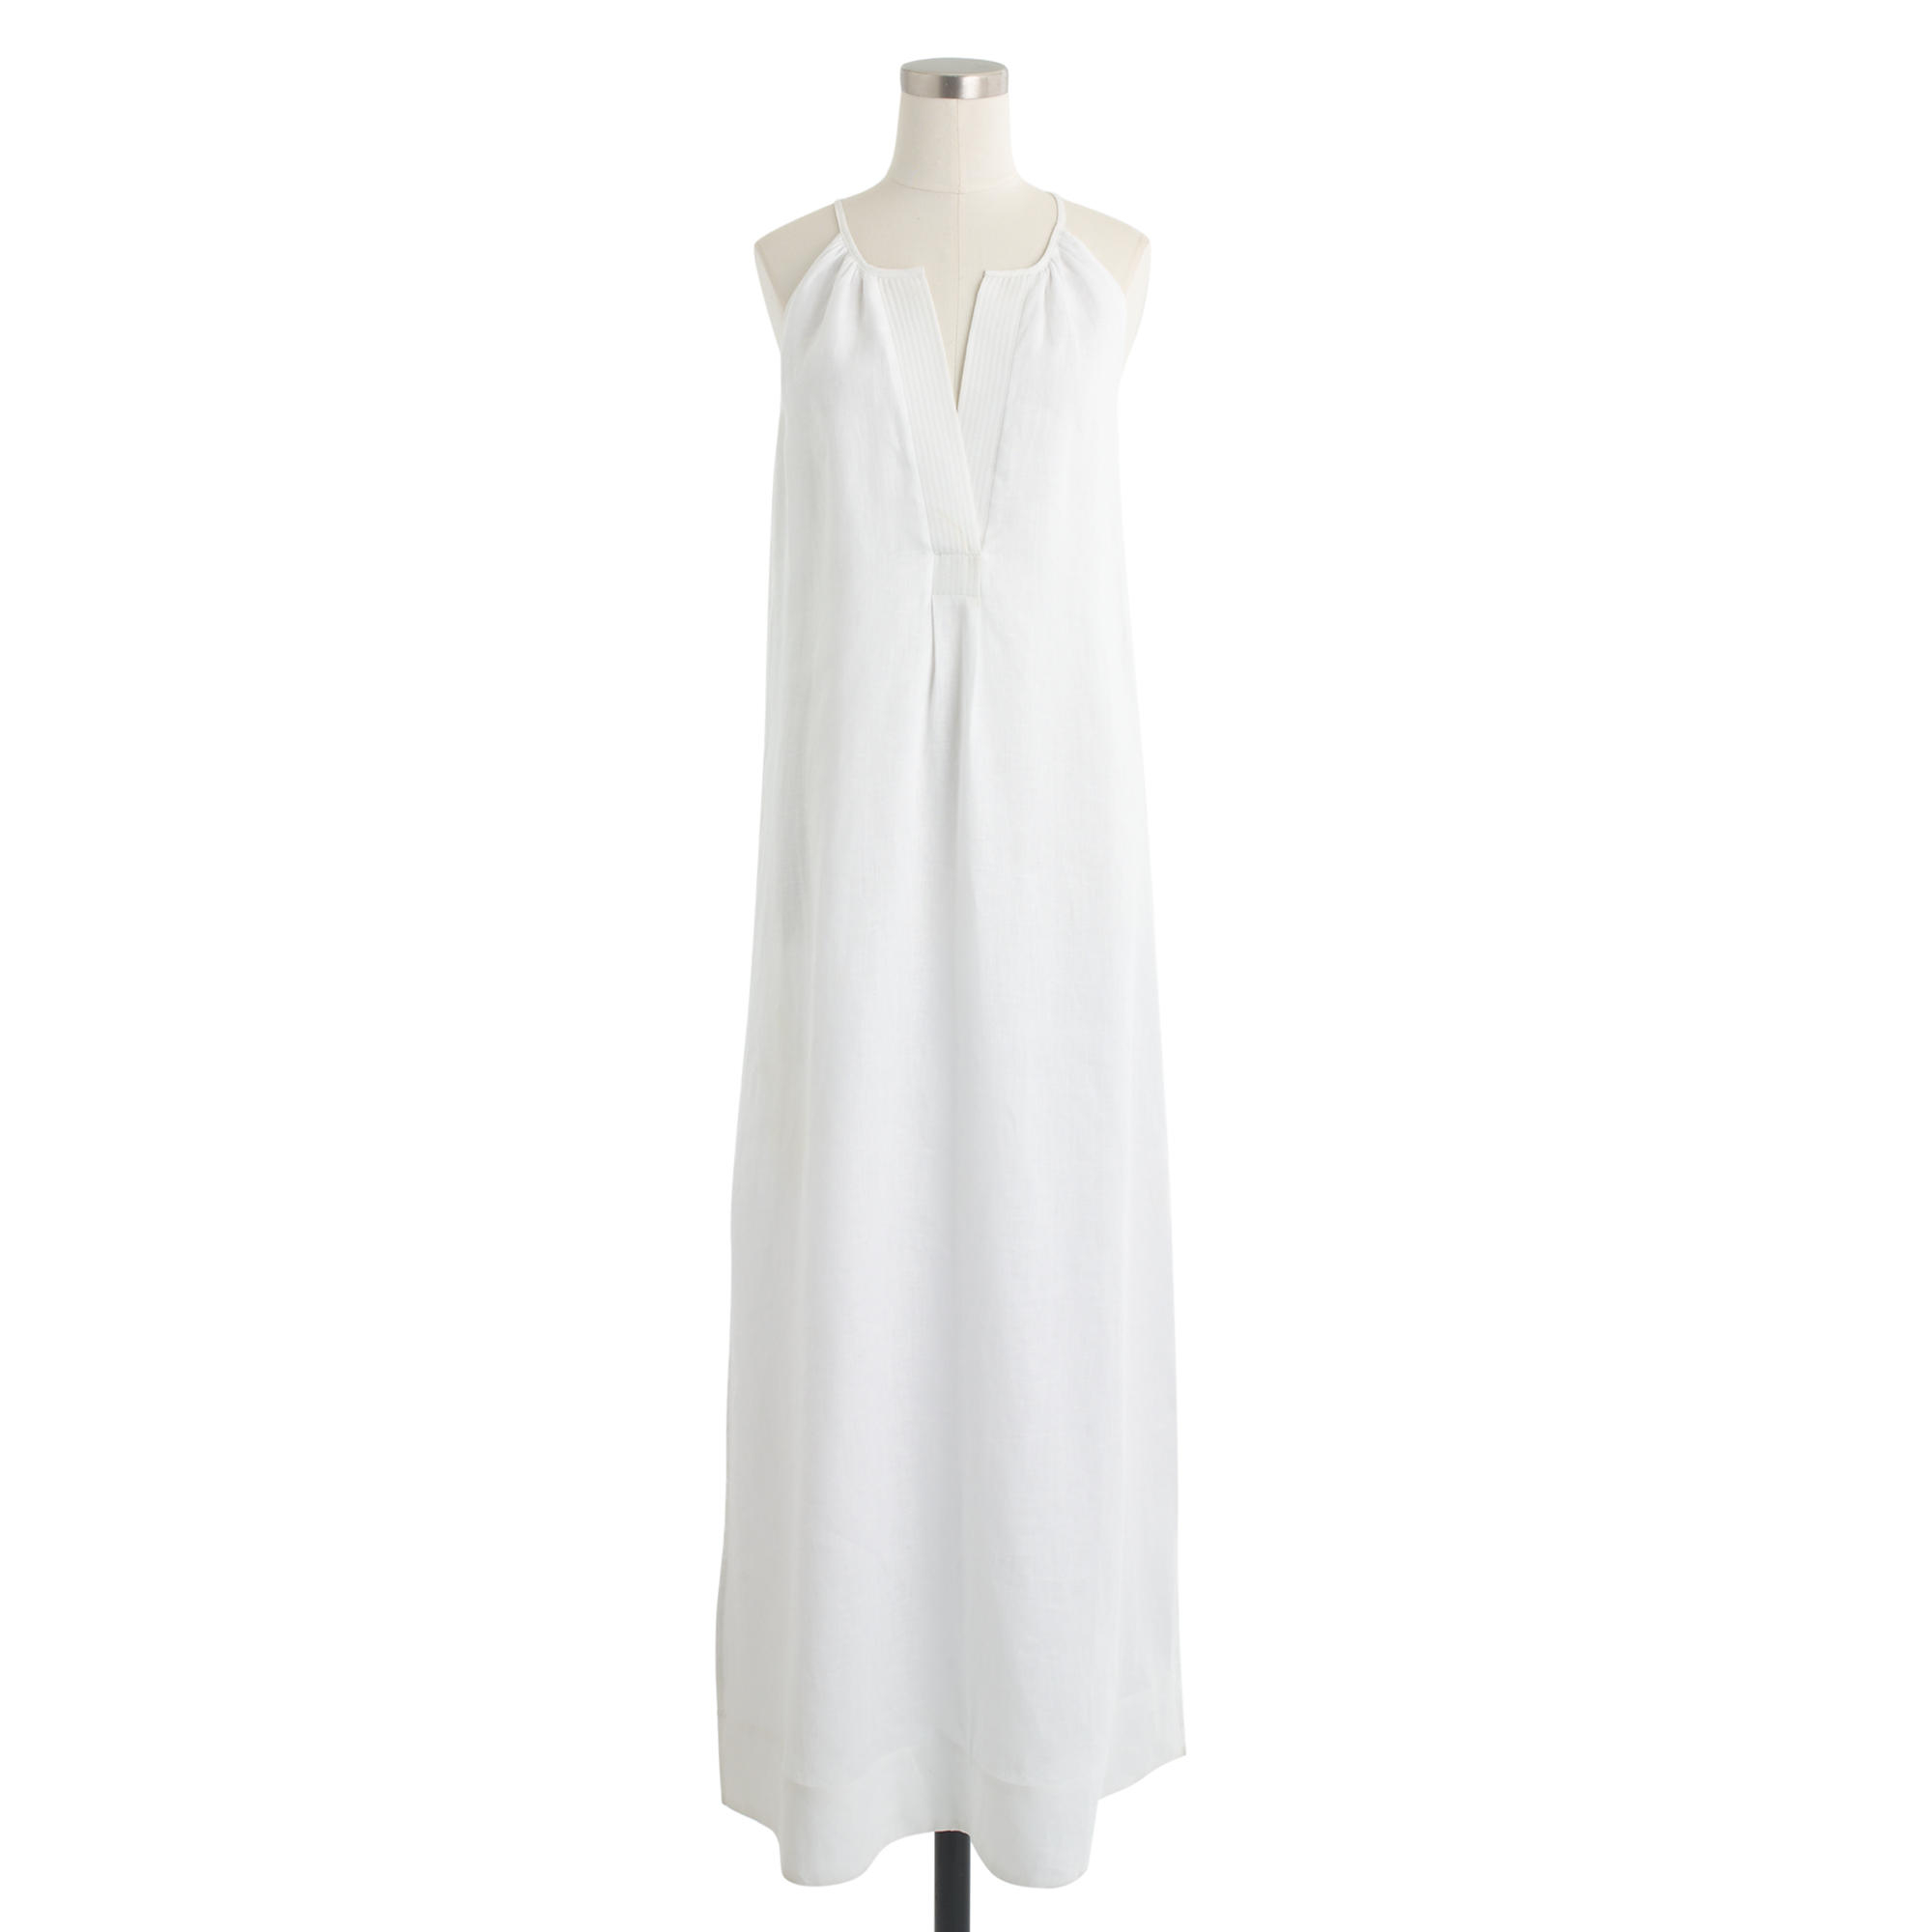 Lyst - J.Crew Linen Halter Maxi Dress in White